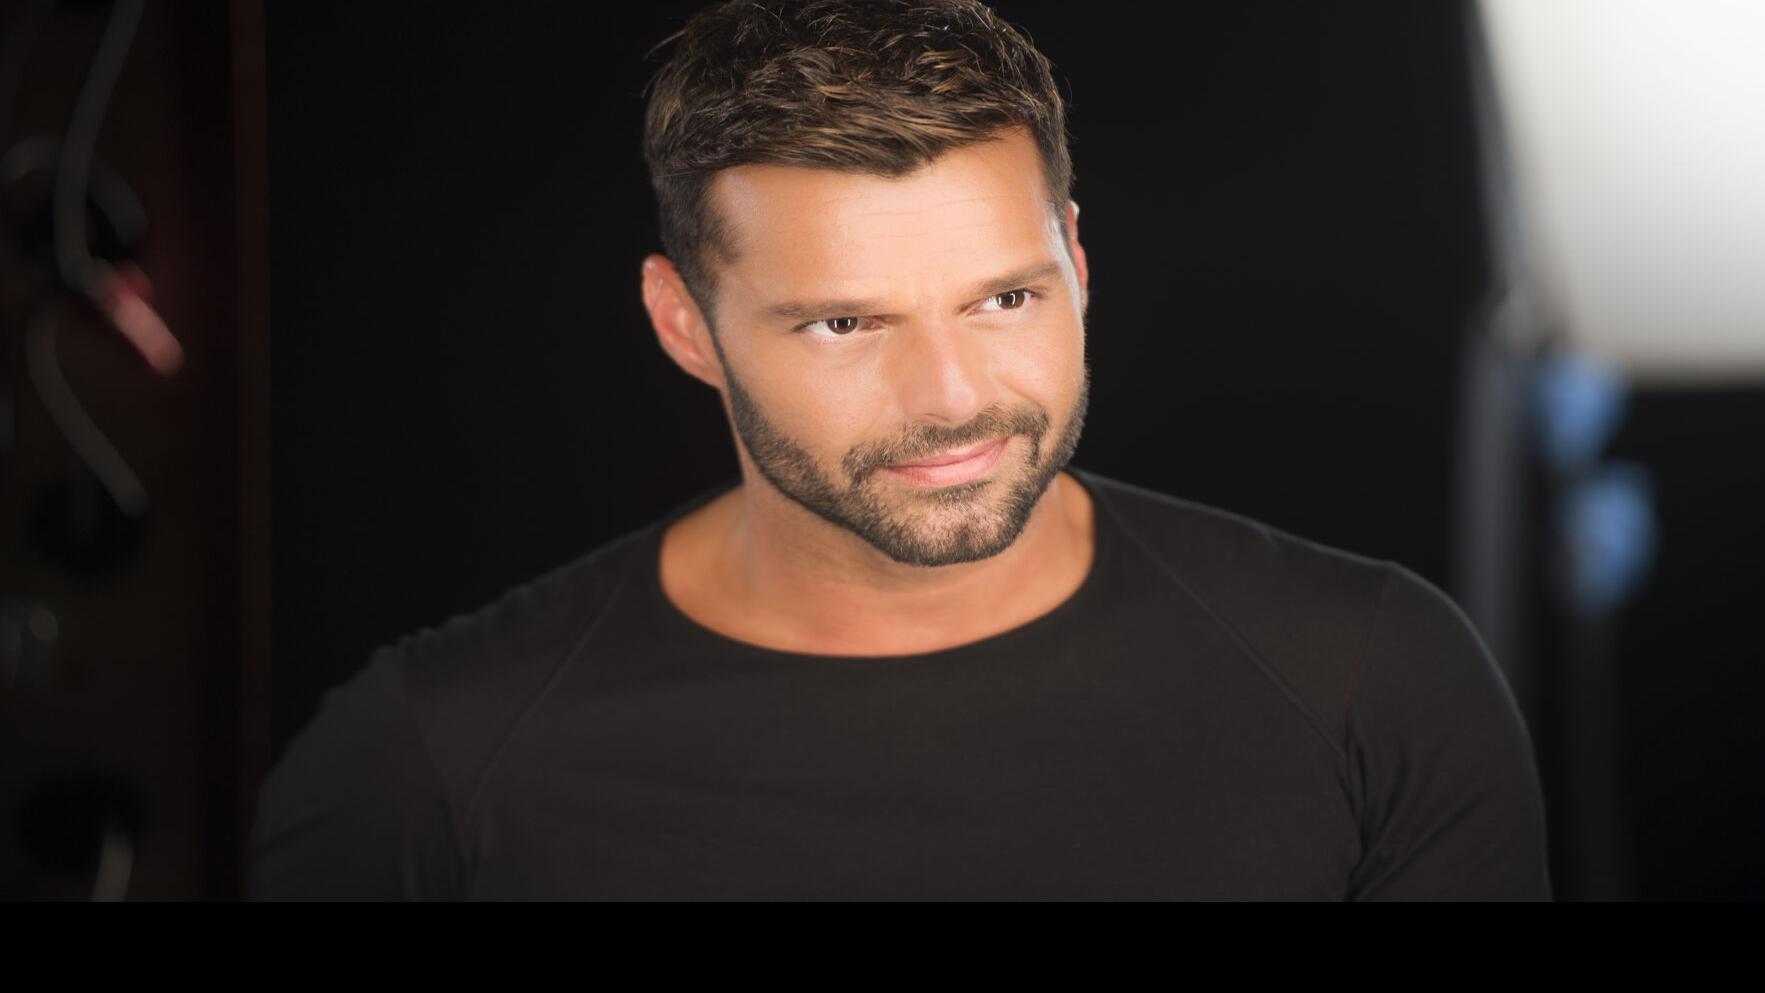 Ricky Martin procura sanar tras asegurar ser “víctima de la mentira” |  Farándula | elvocero.com